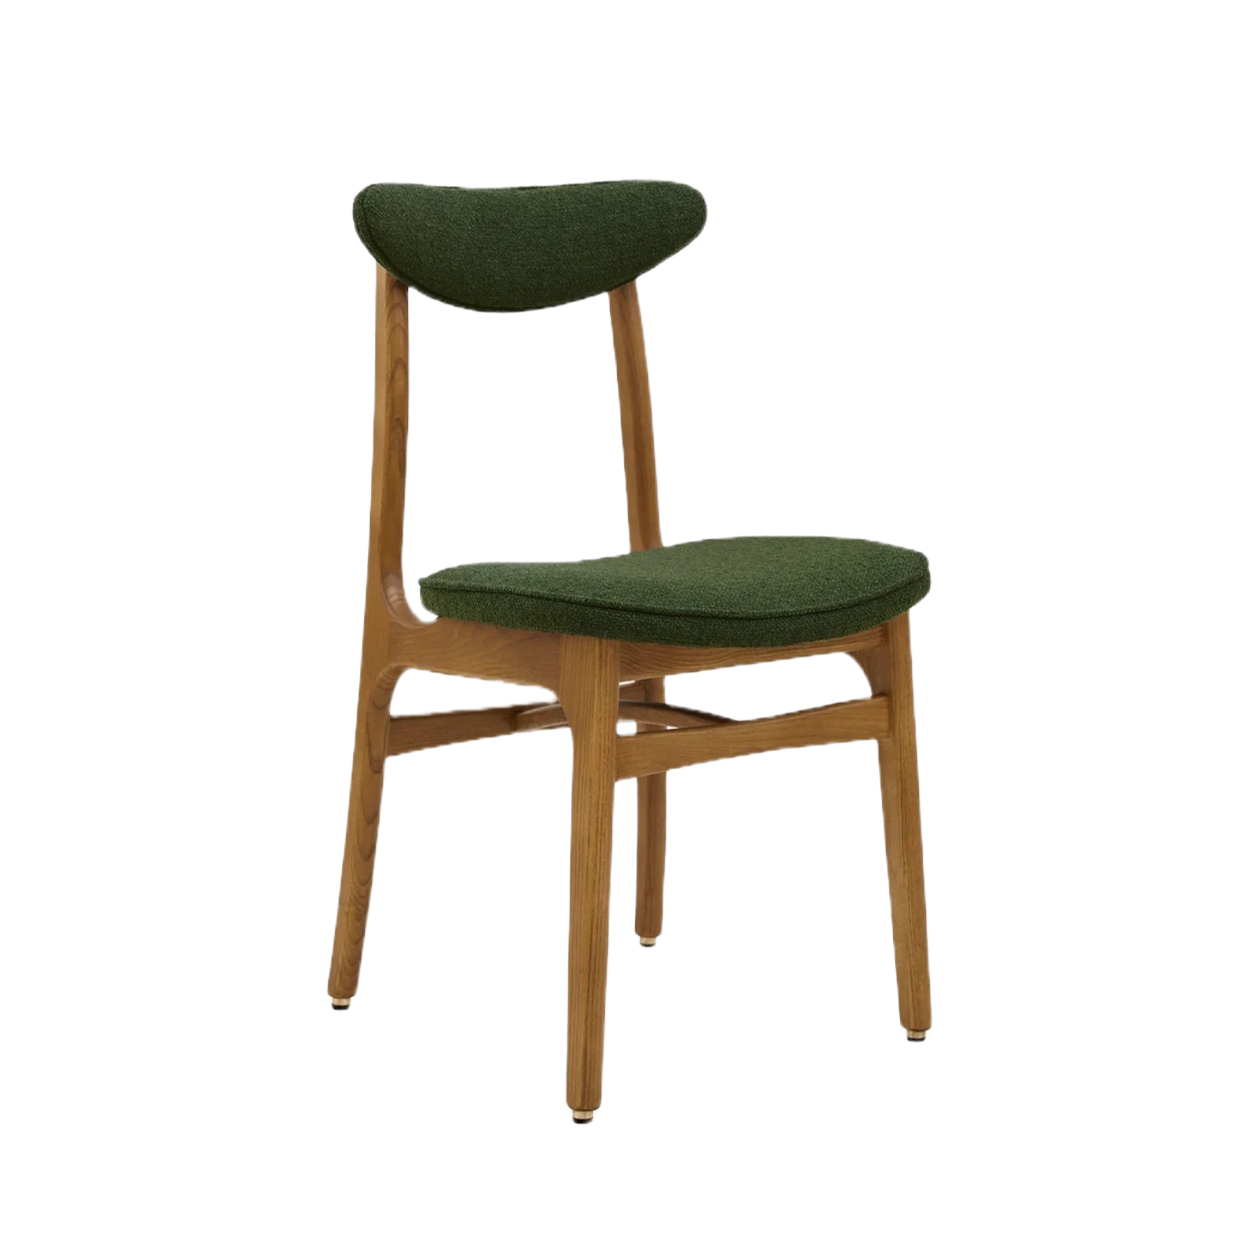 Krzesło 200-190 zielony w tkaninie Boucle Bottle Green 366 concept    Eye on Design